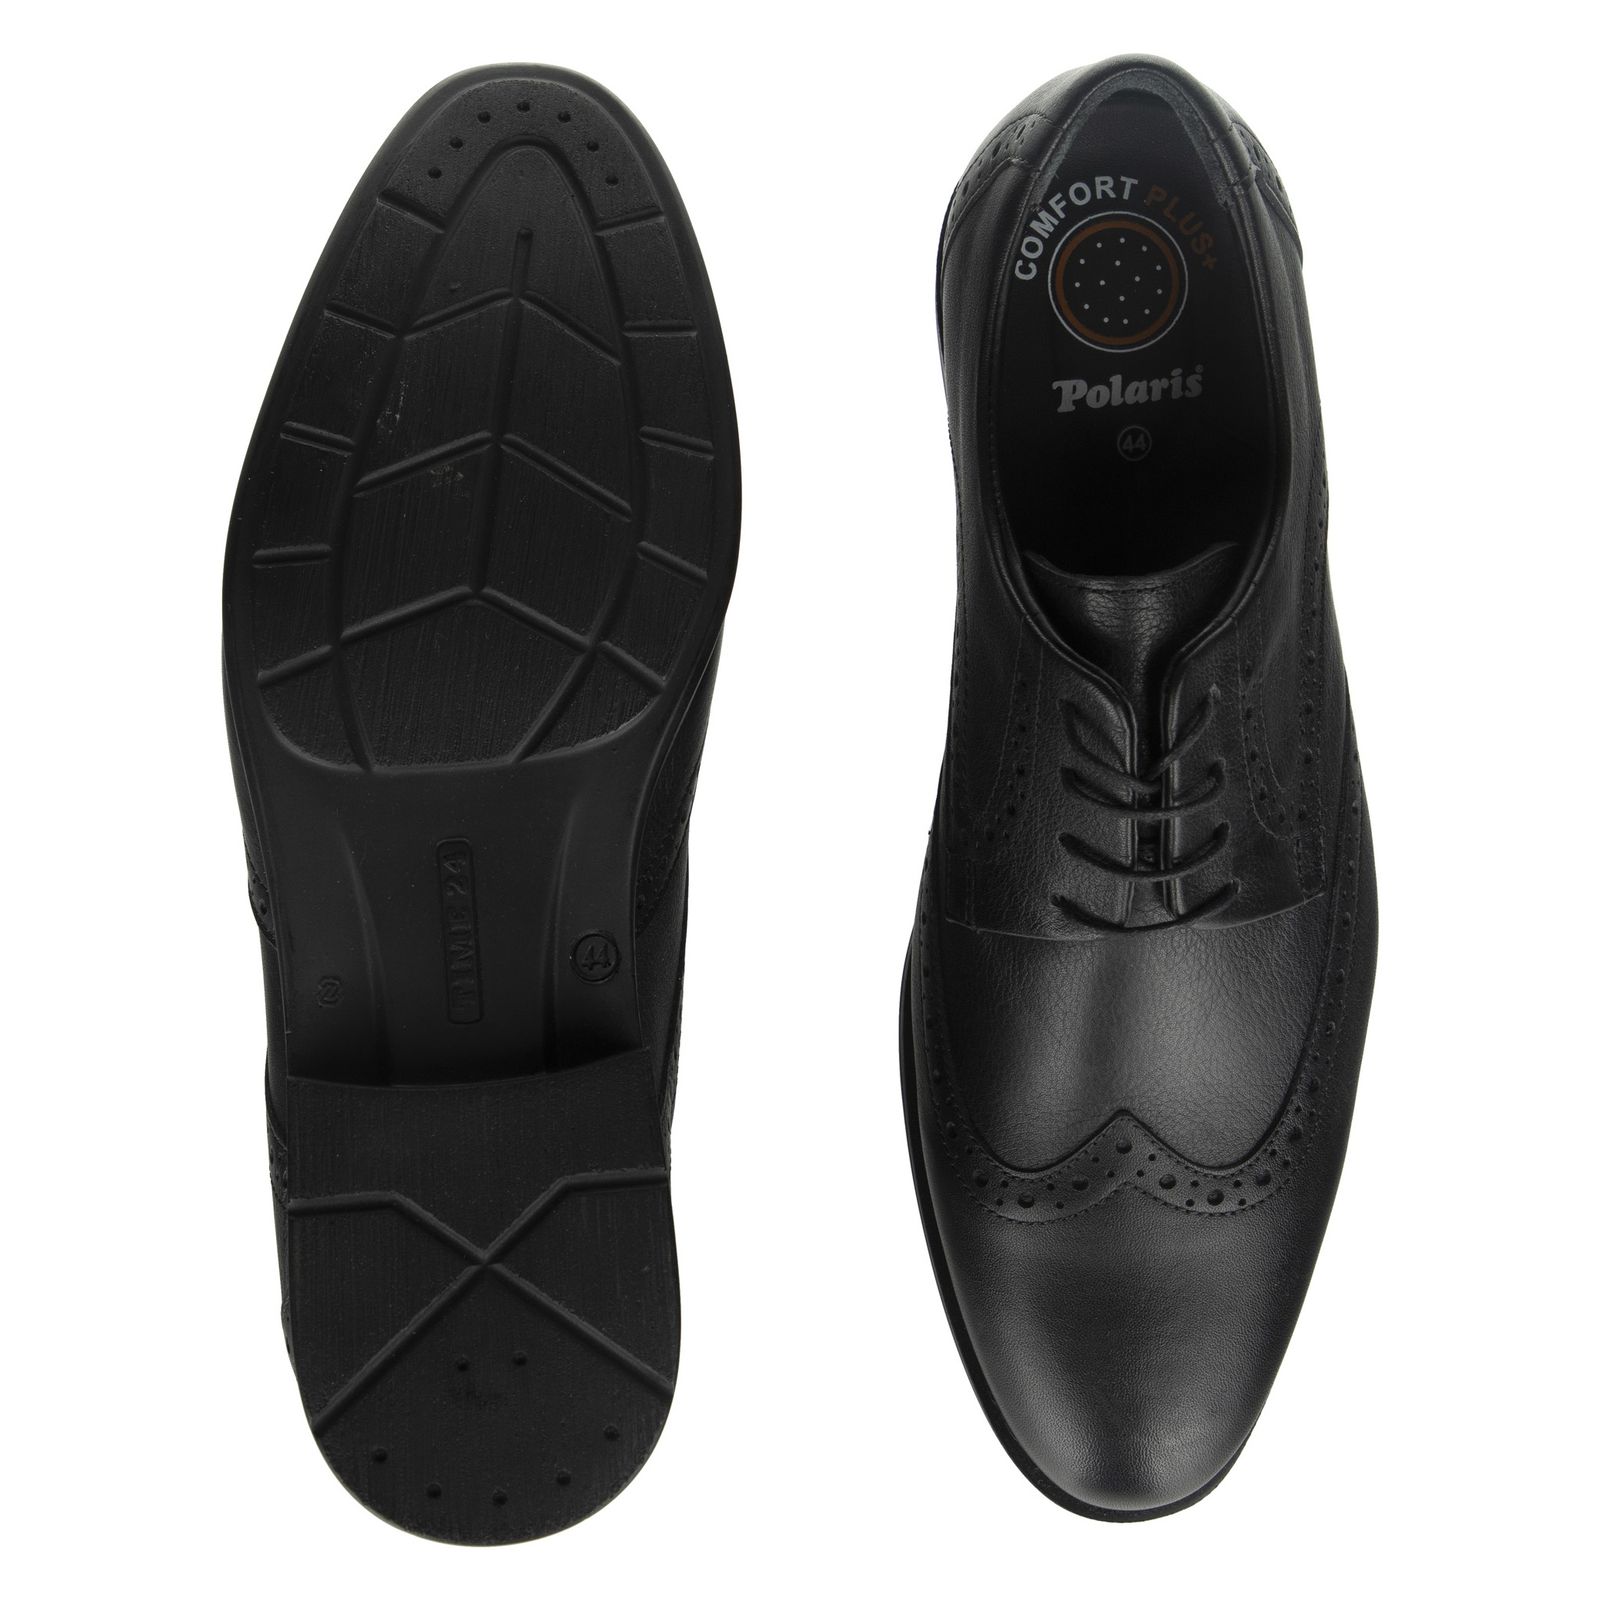 کفش مردانه پولاریس مدل 100297123-101 - مشکی - 6